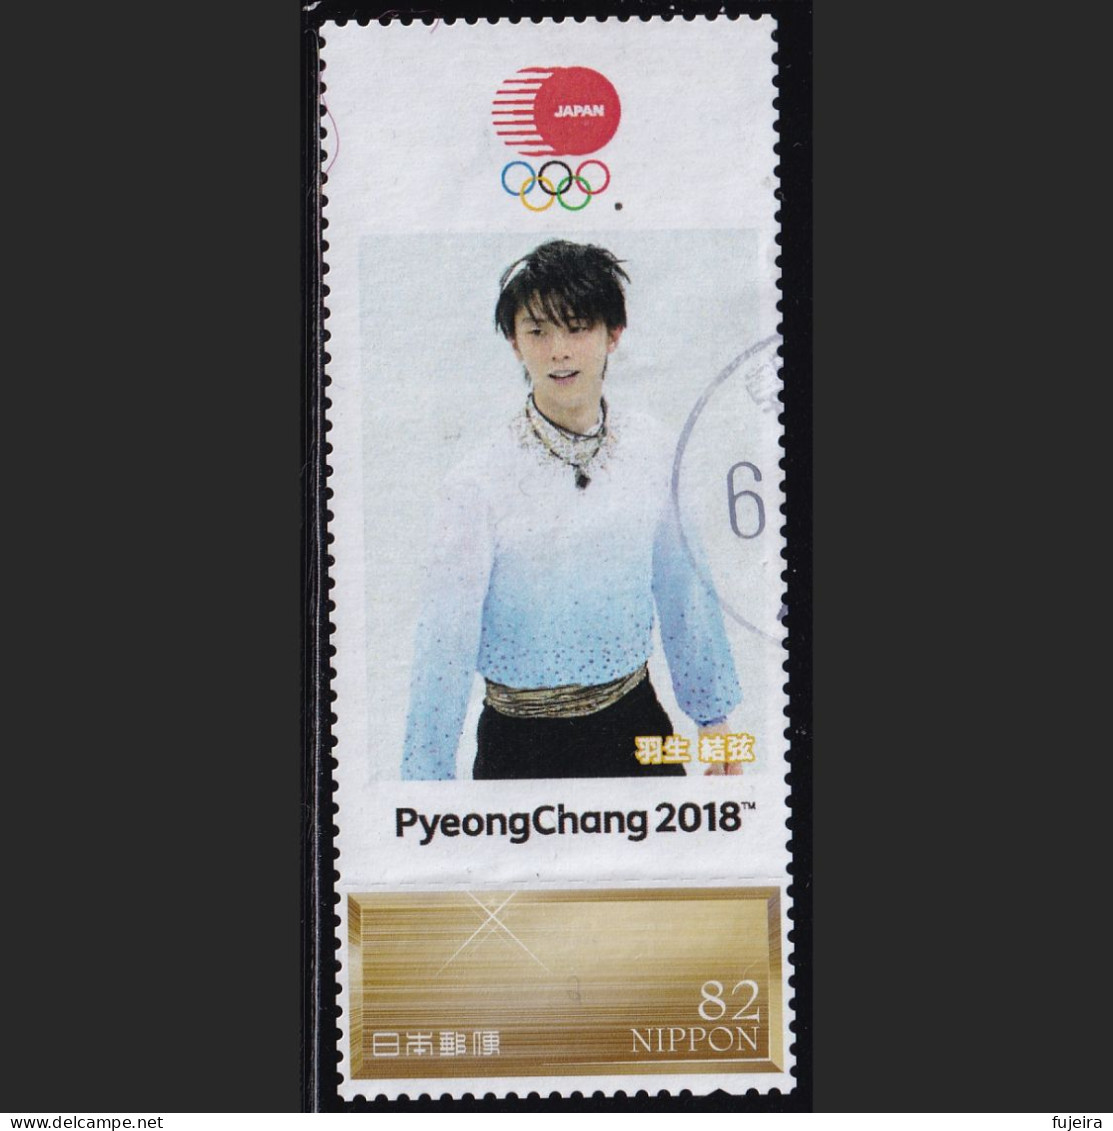 Japan Personalized Stamp, PyeonChang 2018 Olympic Hanyu Yuzuru Figure Skate (jpv9603) Used - Oblitérés